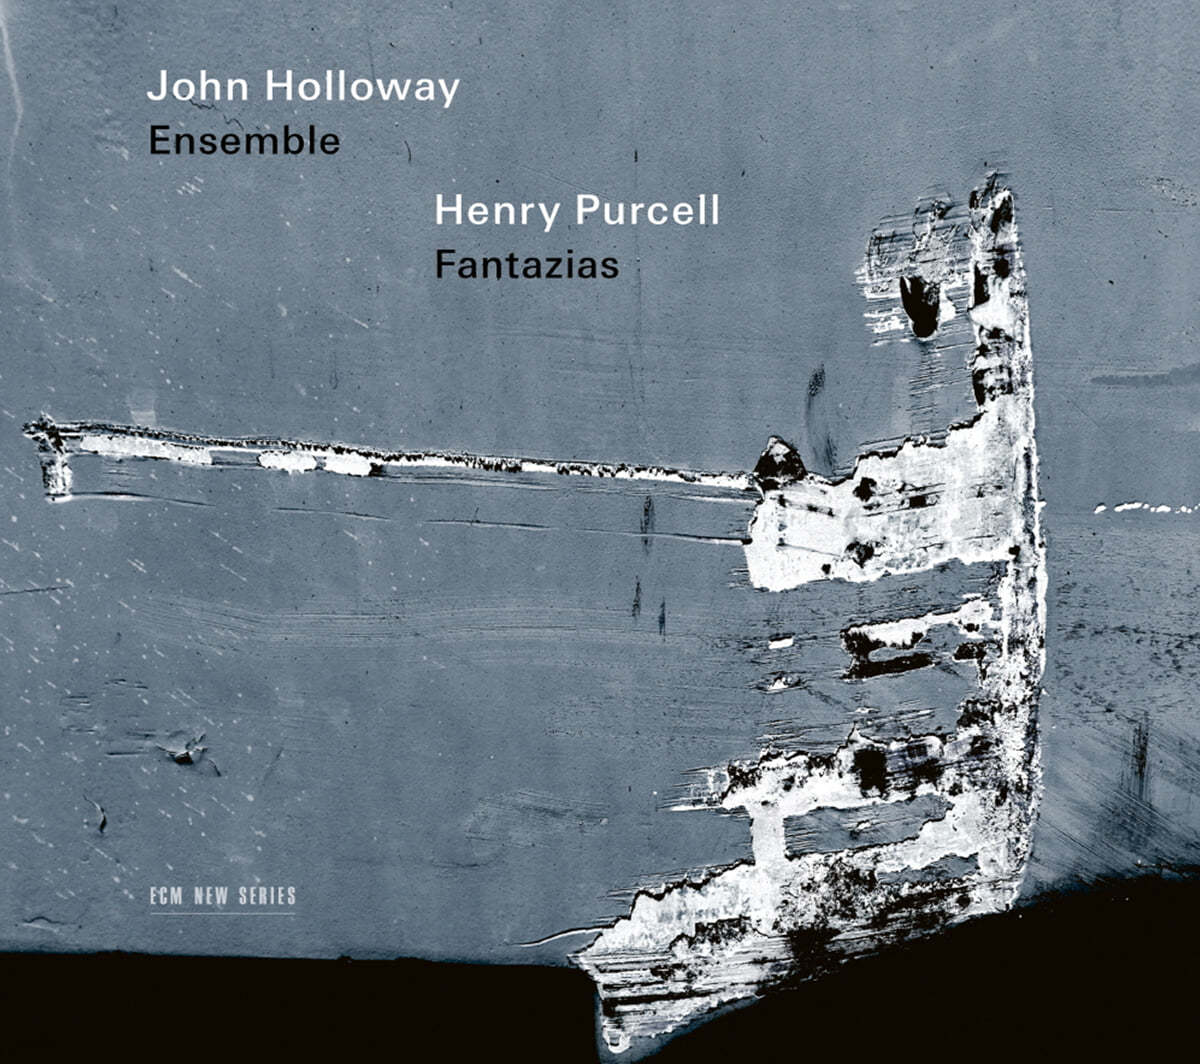 John Holloway Ensemble 퍼셀: 판타지아 (Henry Purcell: Fantazias)